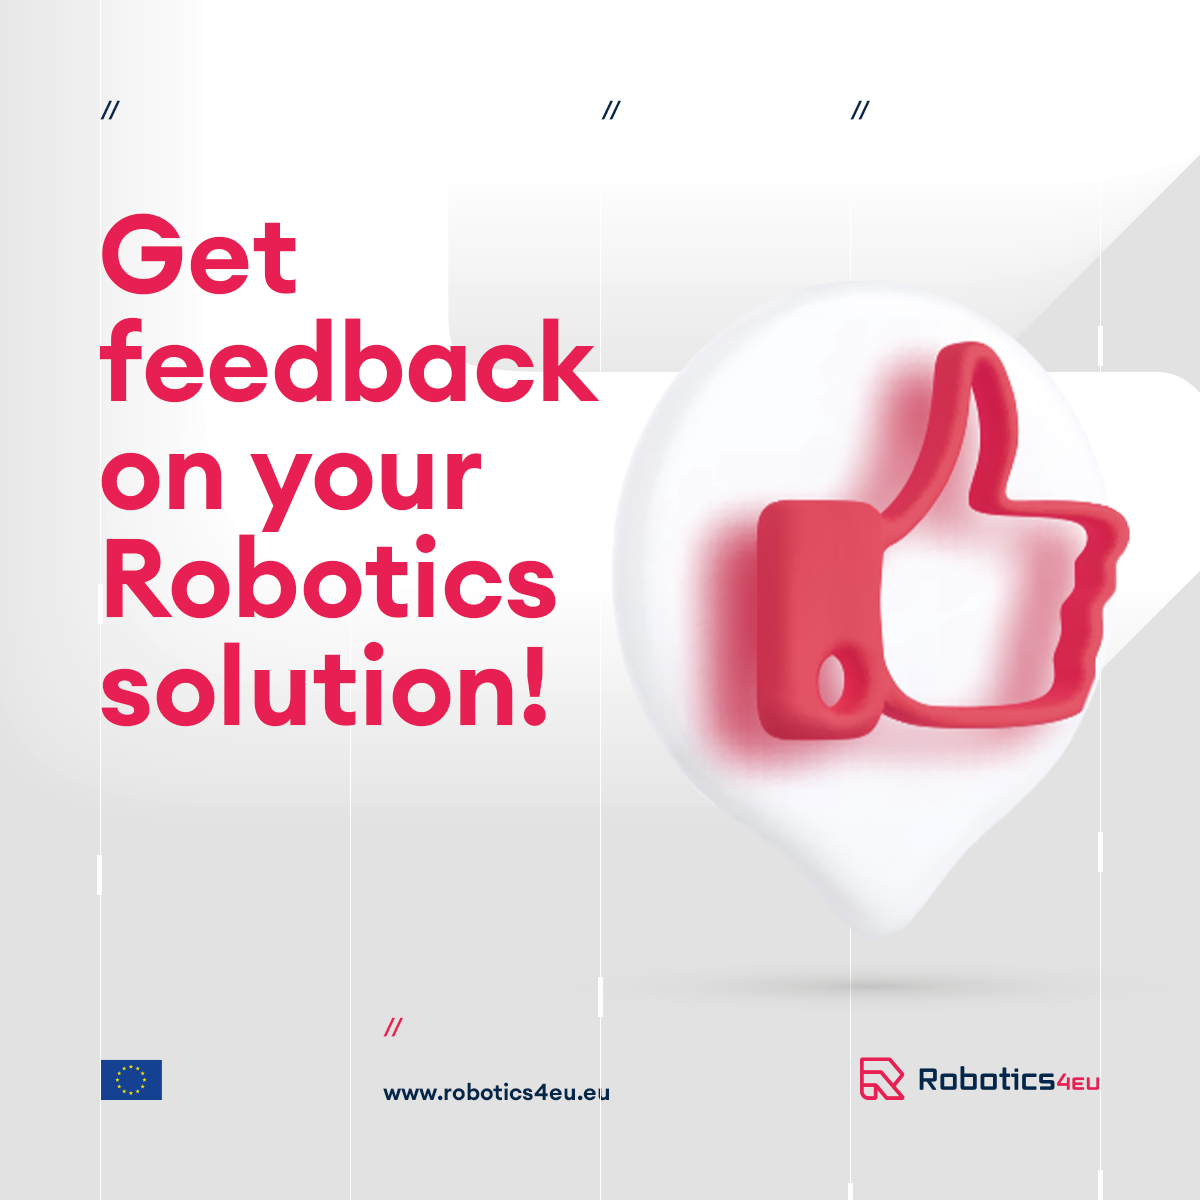 Get feedback on your Robotics solution!